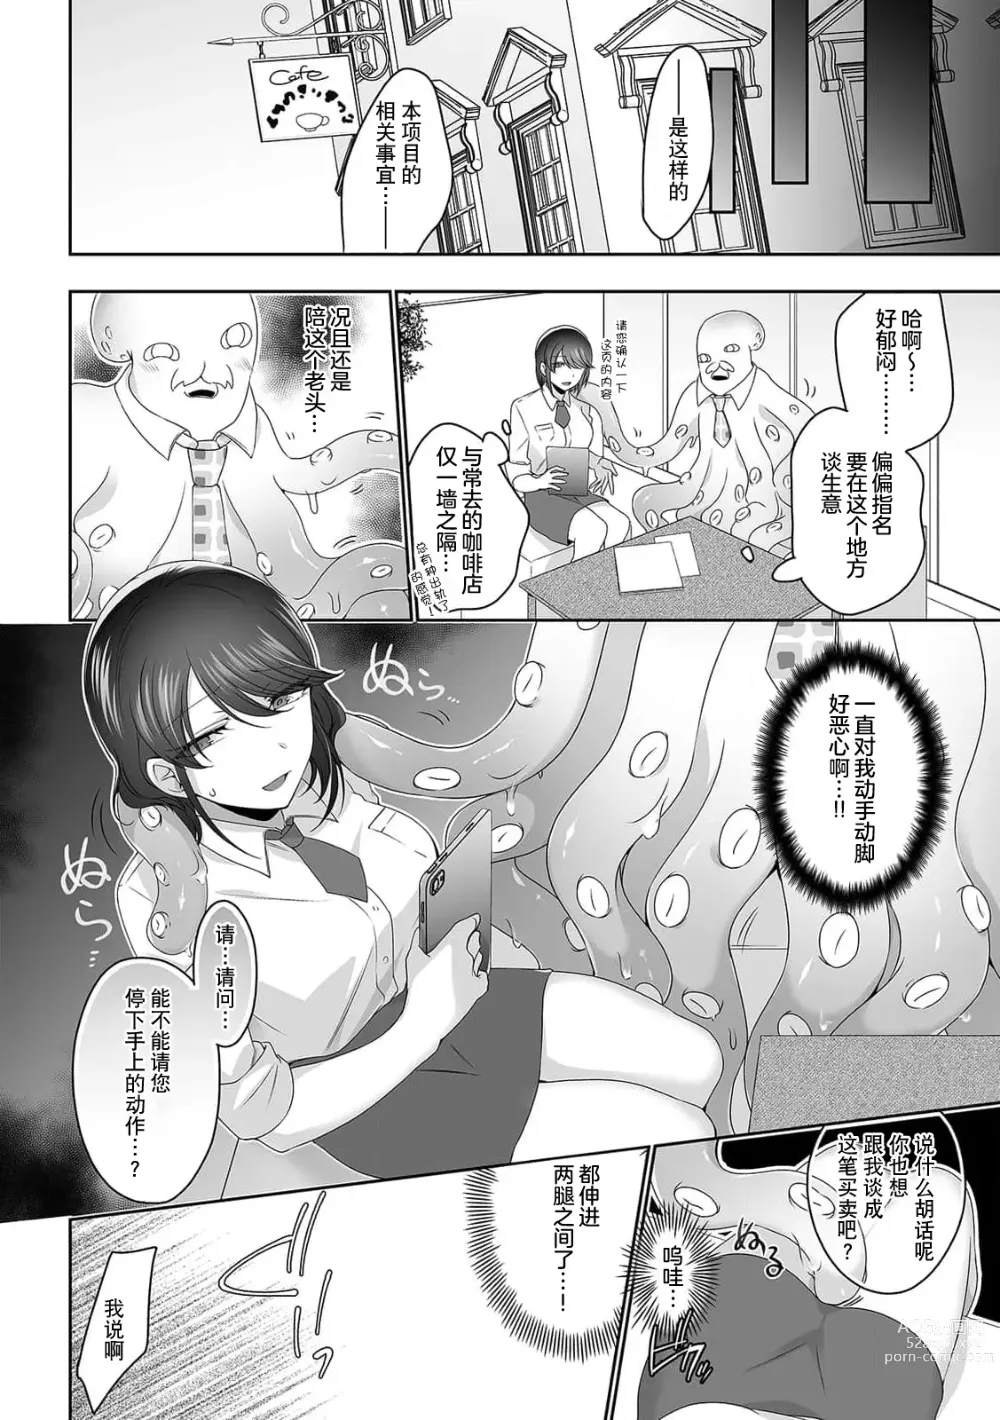 Page 5 of manga 顺势跟着毛绒大狗一起逃进了宾馆里！？「想要和你做舒服的事…」